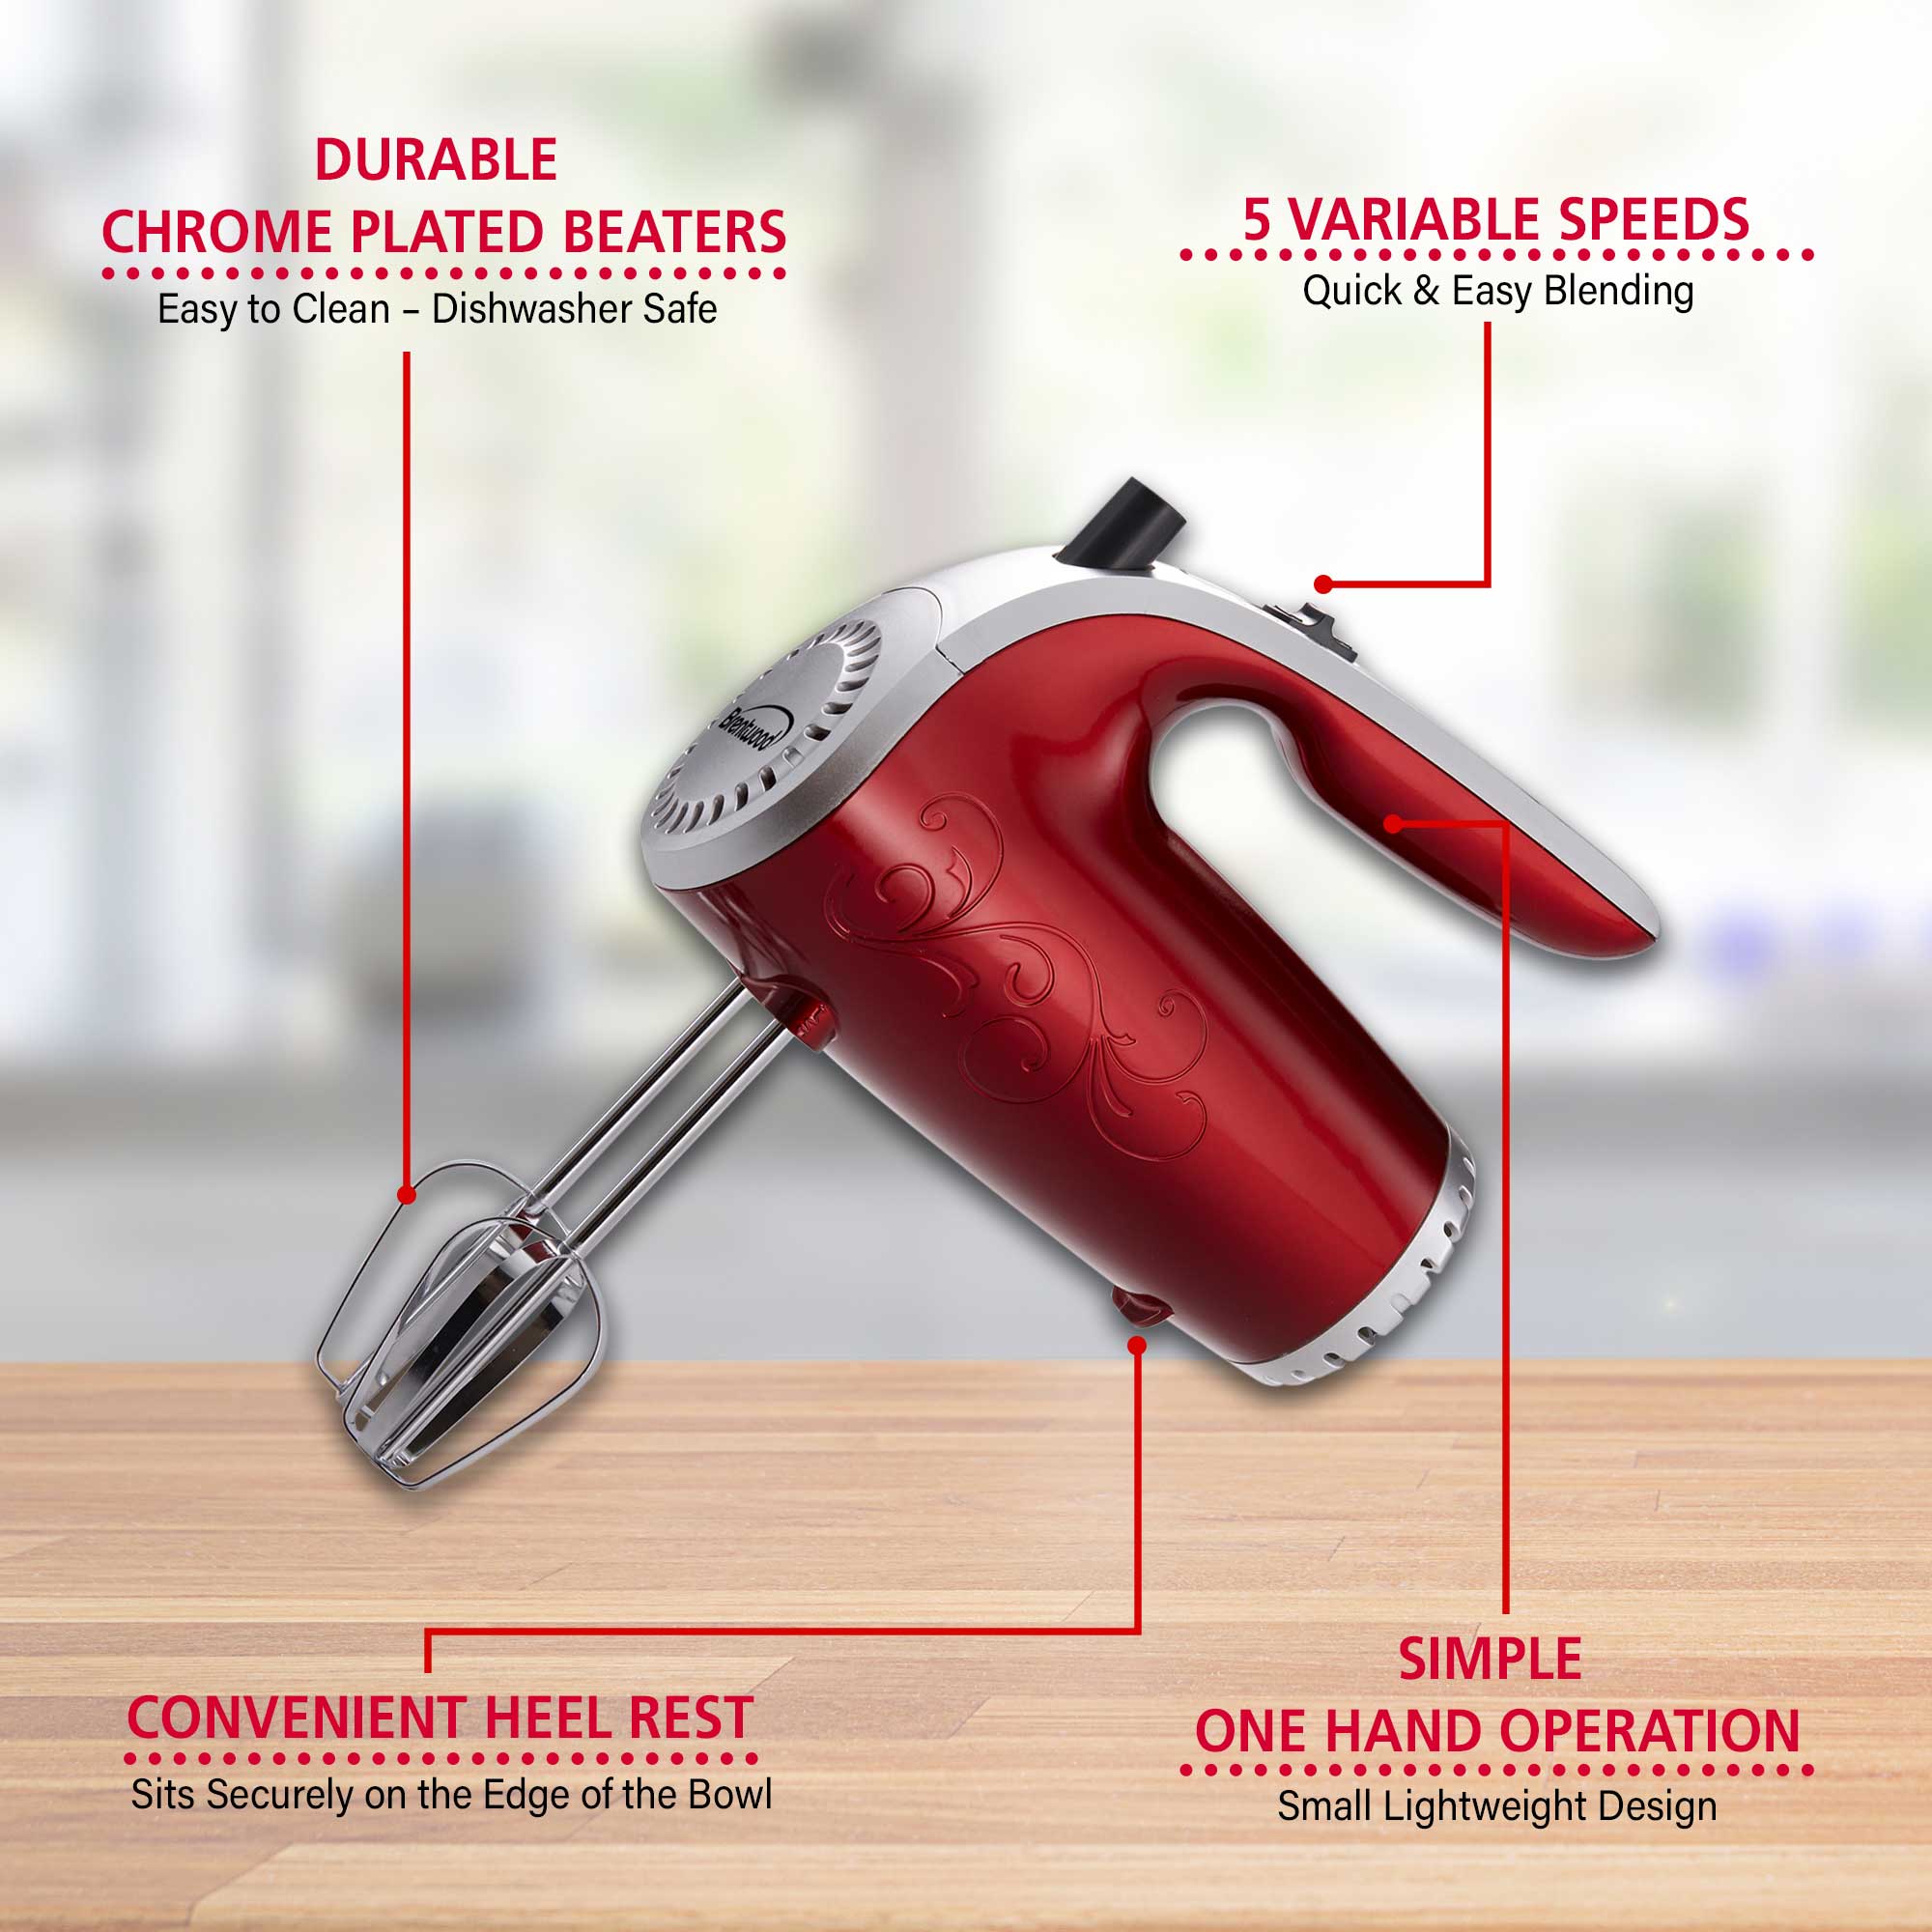 Lumme 5-Speed Hand Mixer 250W Power Advantage in Red